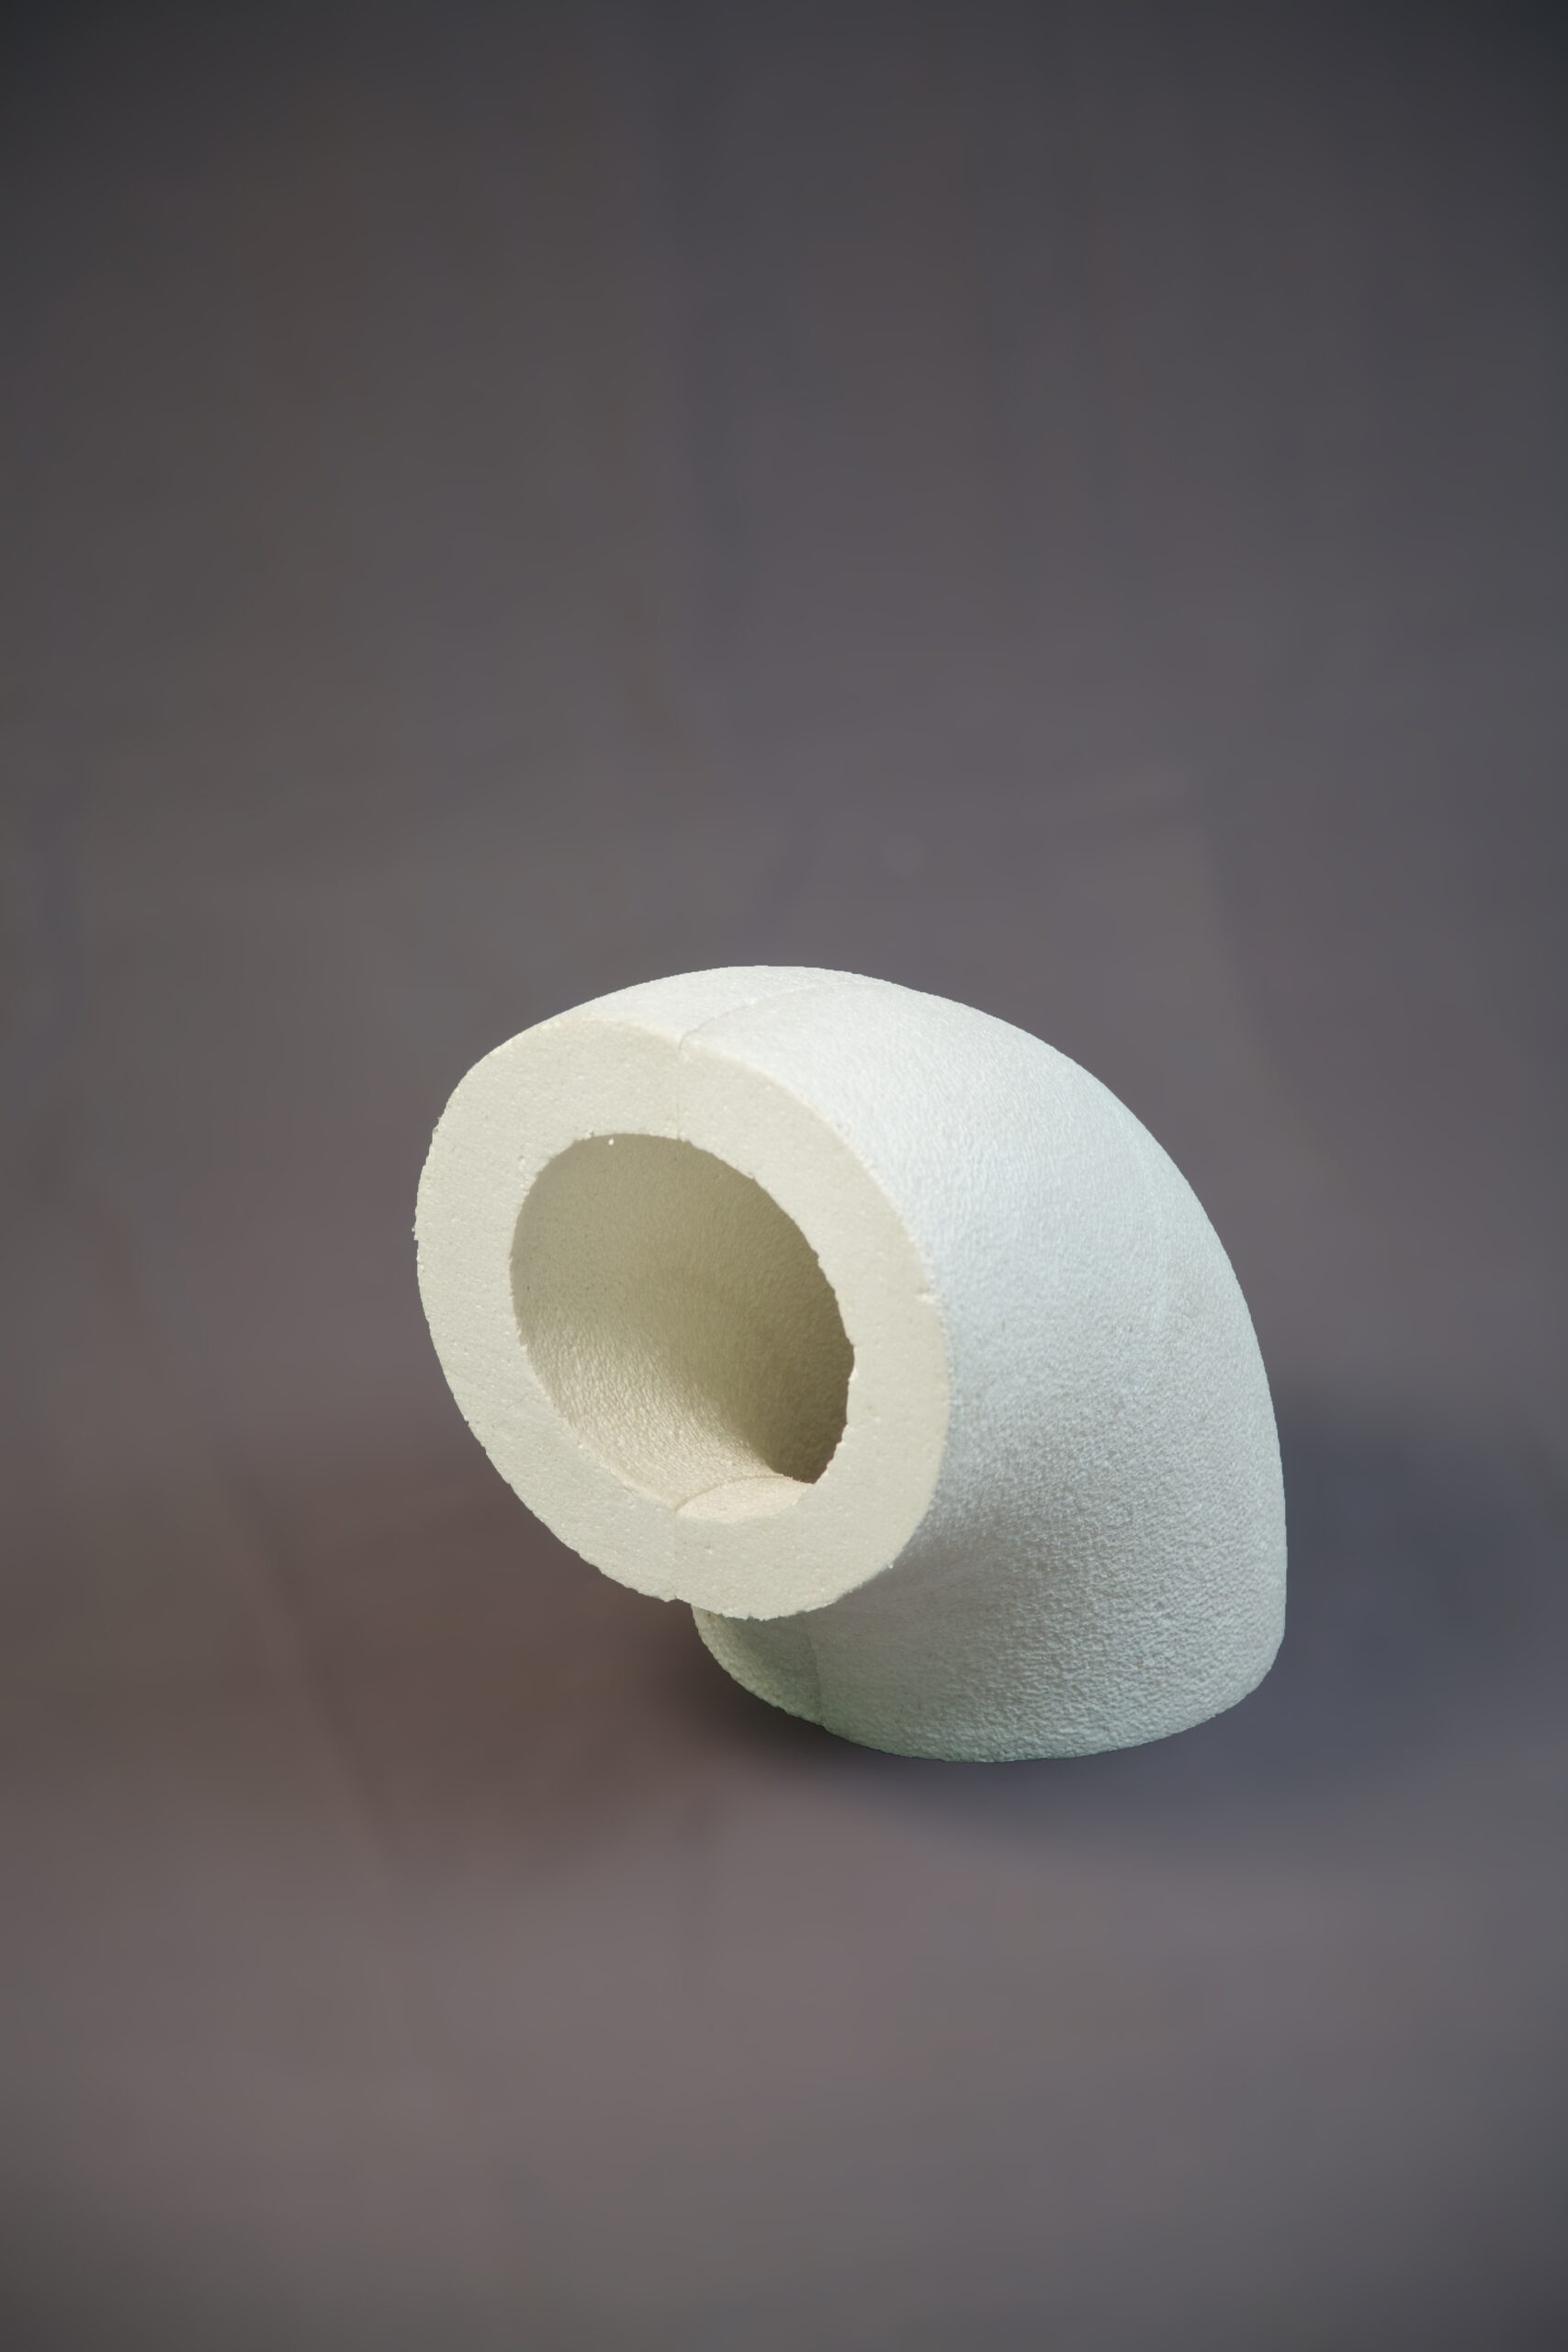 Styro foam Insulation Elbows